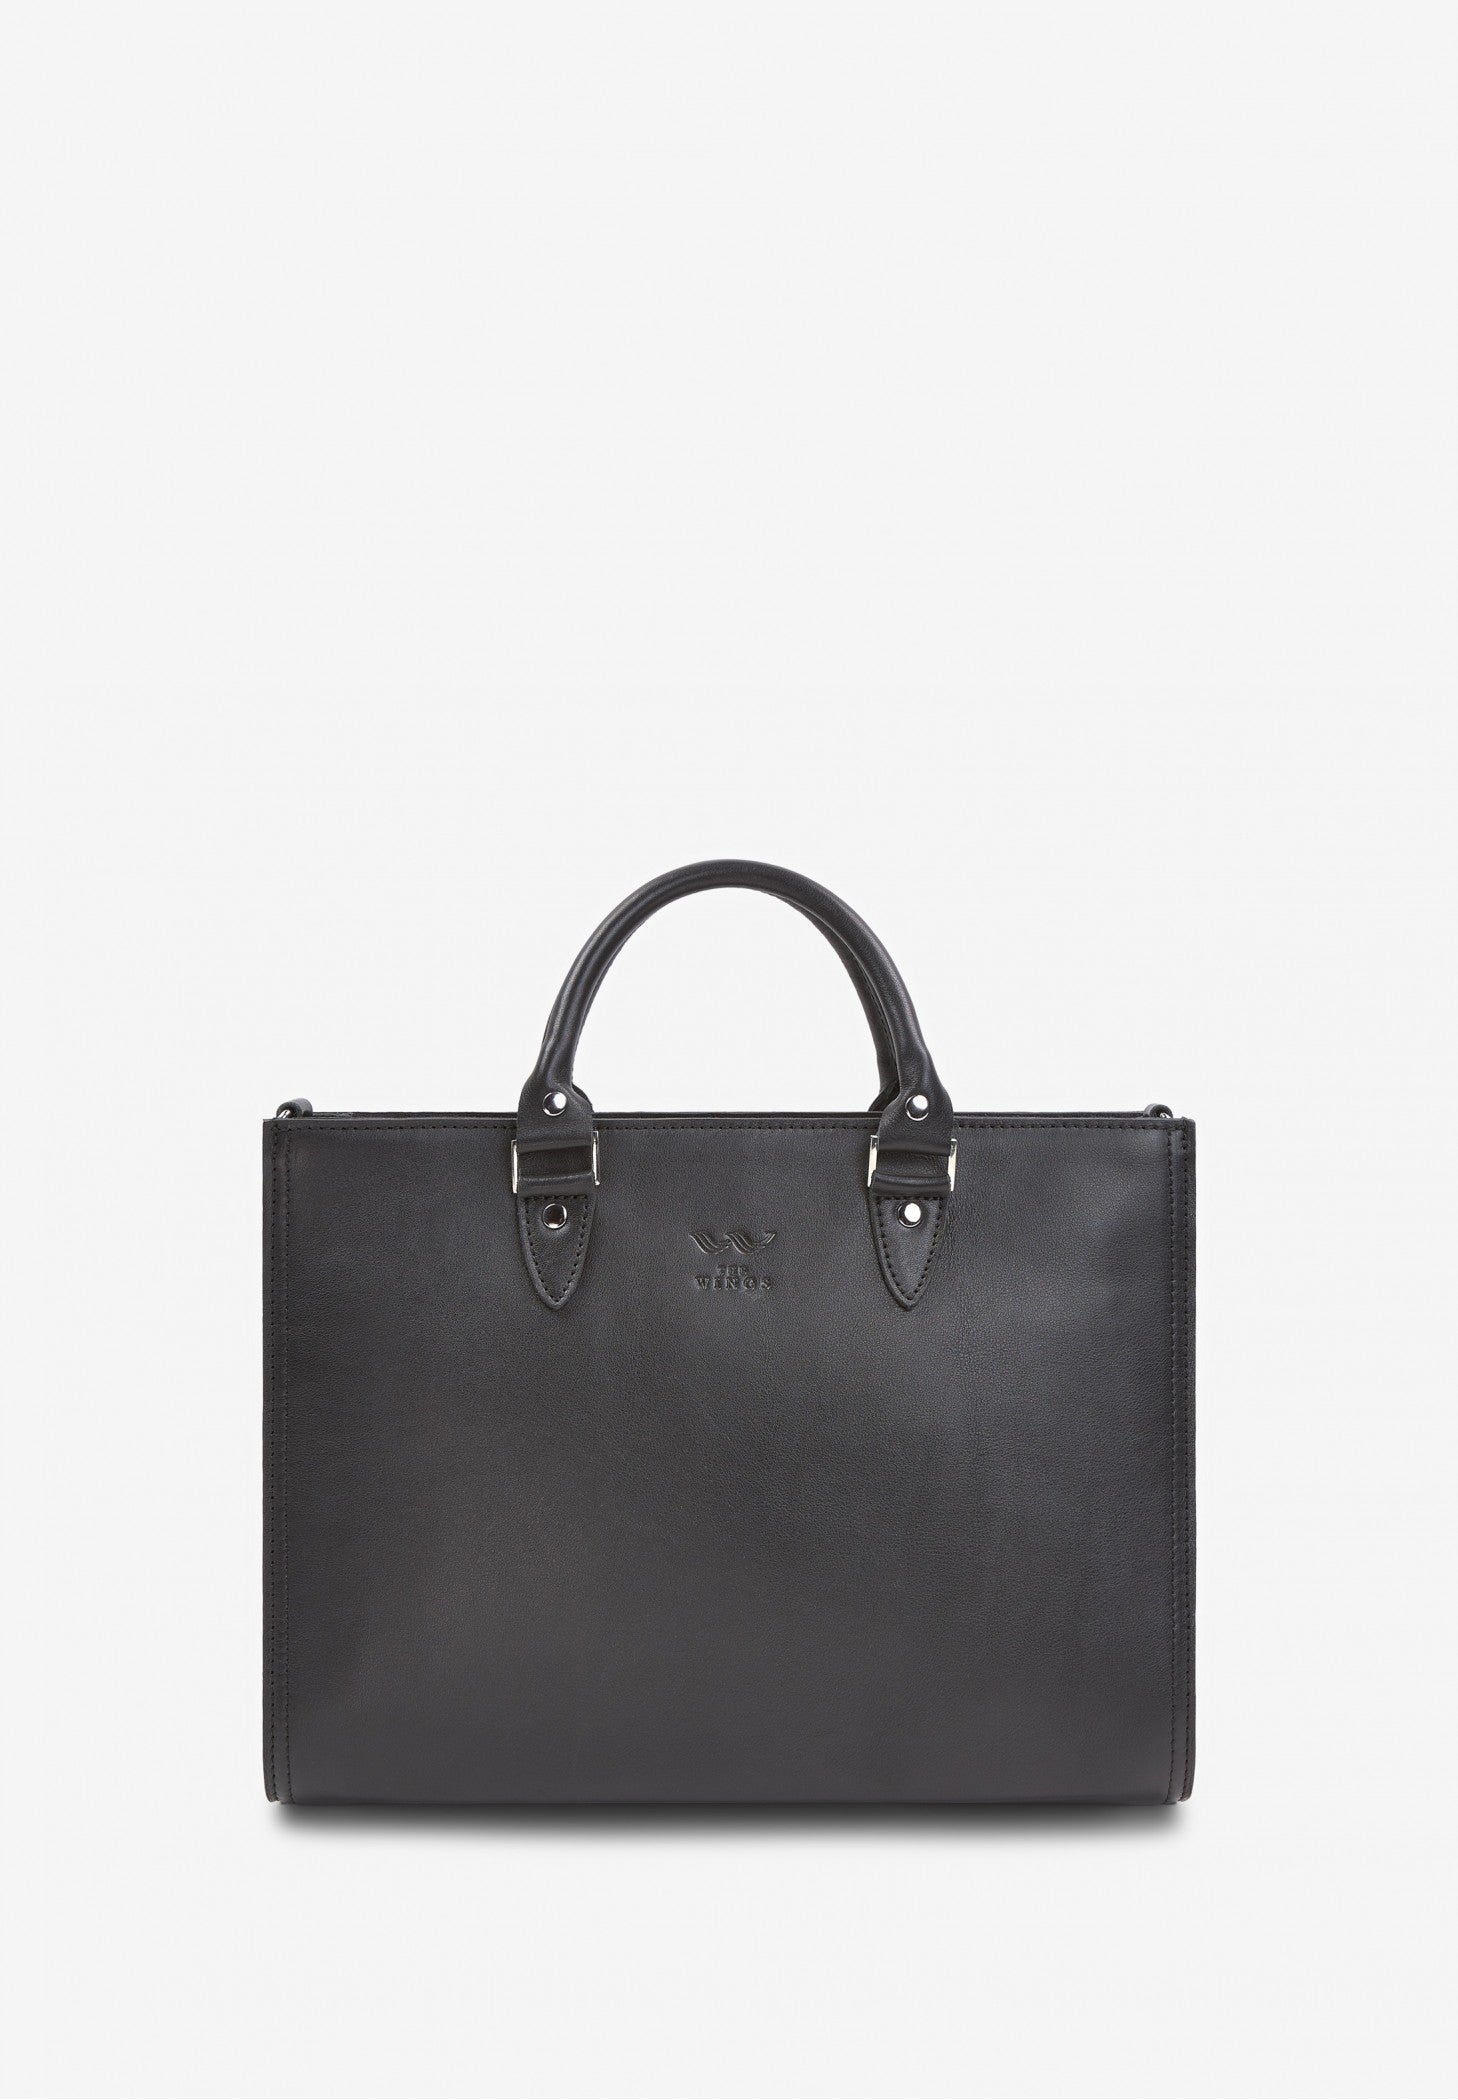 black leather bag for women